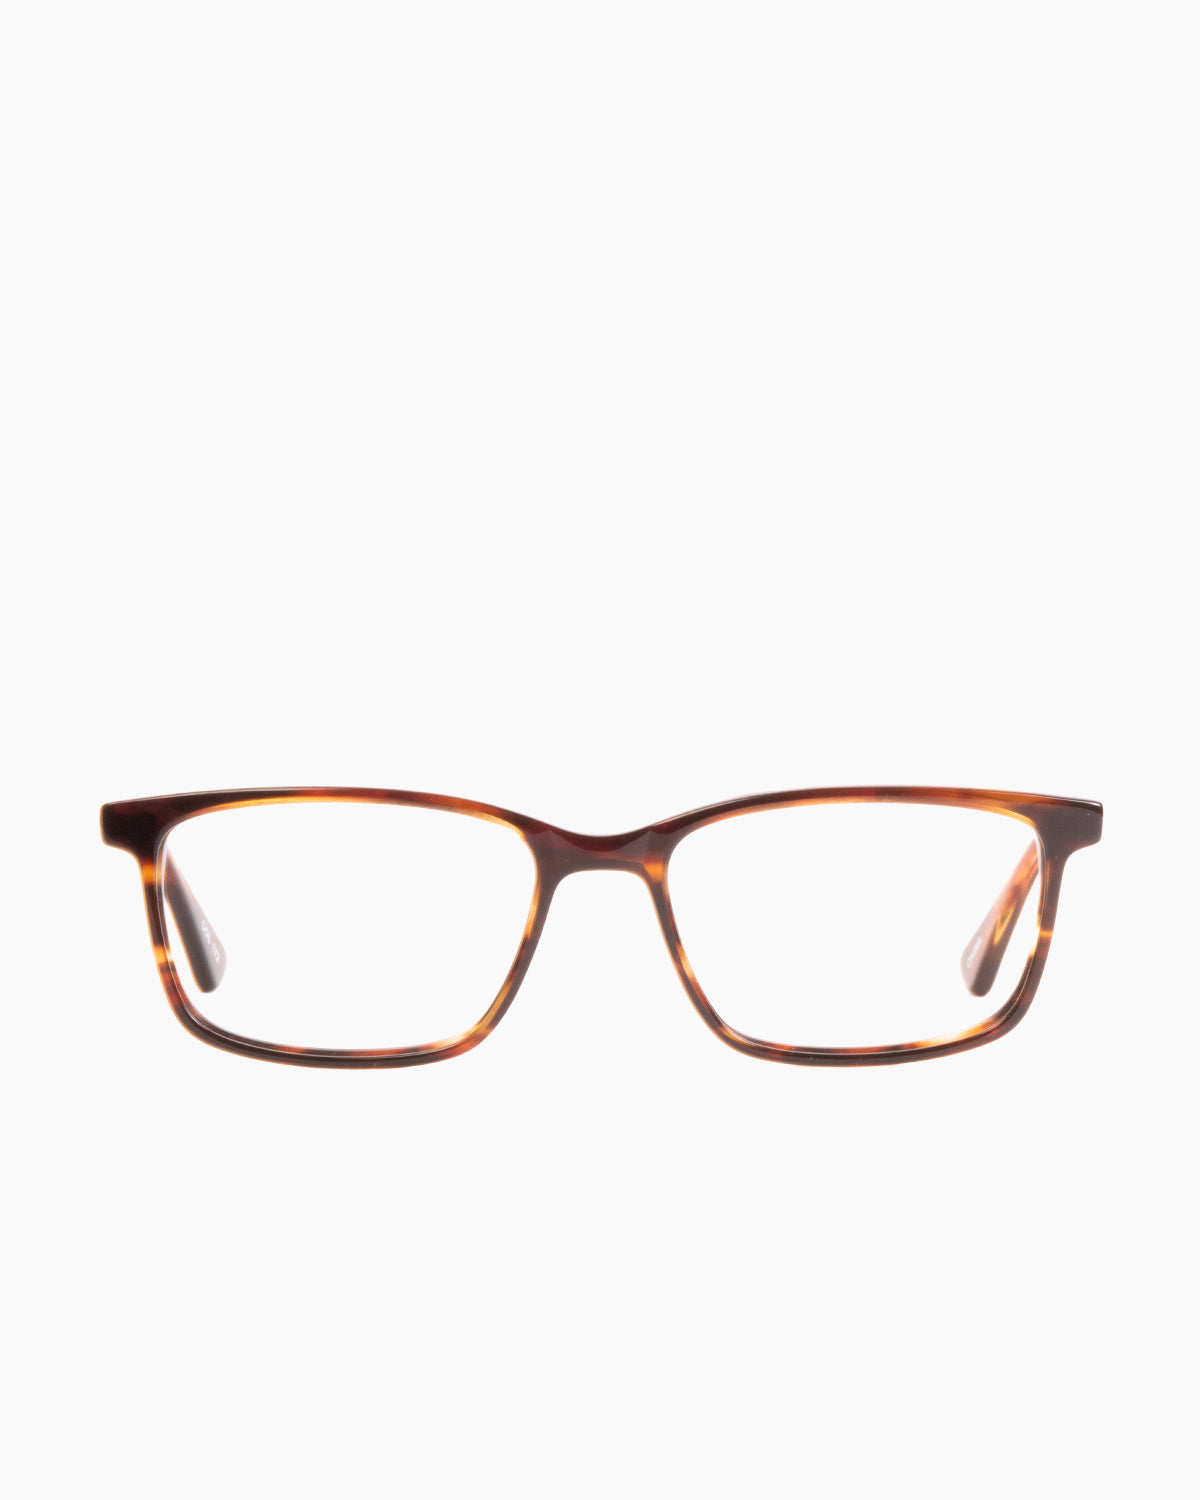 Evolve - Carter - 172 | Bar à lunettes:  Marie-Sophie Dion